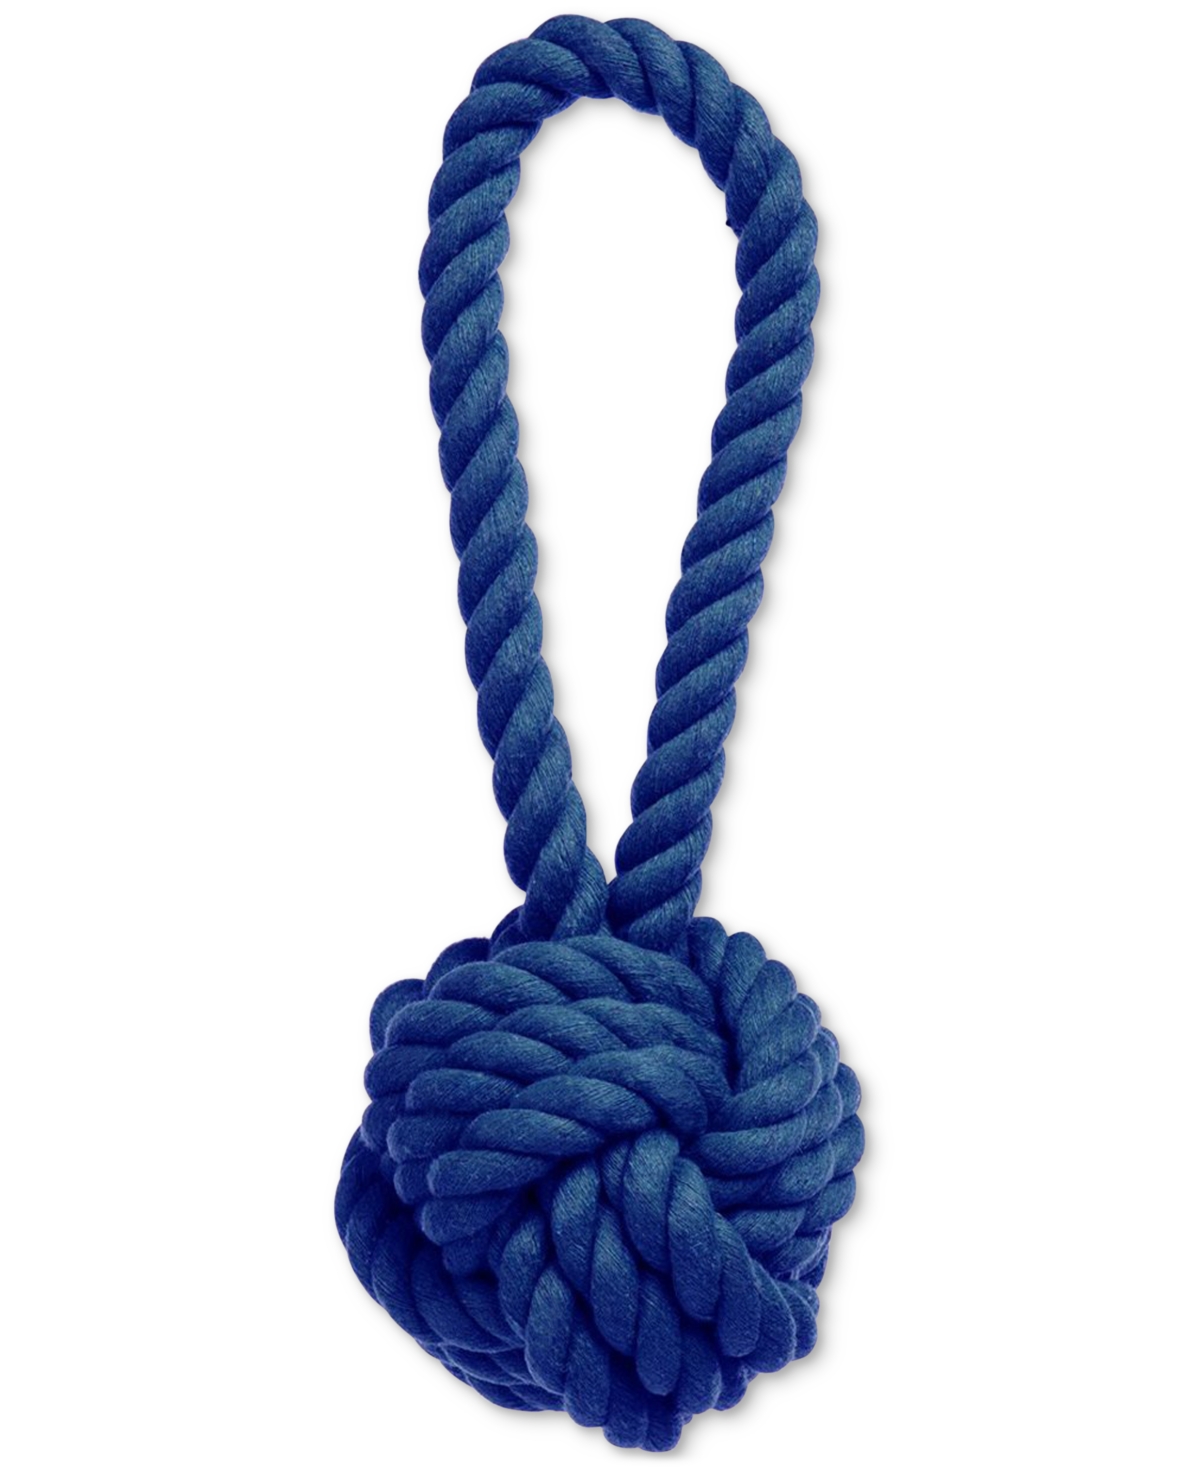 Celtic Knot Rope Dog Toy, Blue - Blue